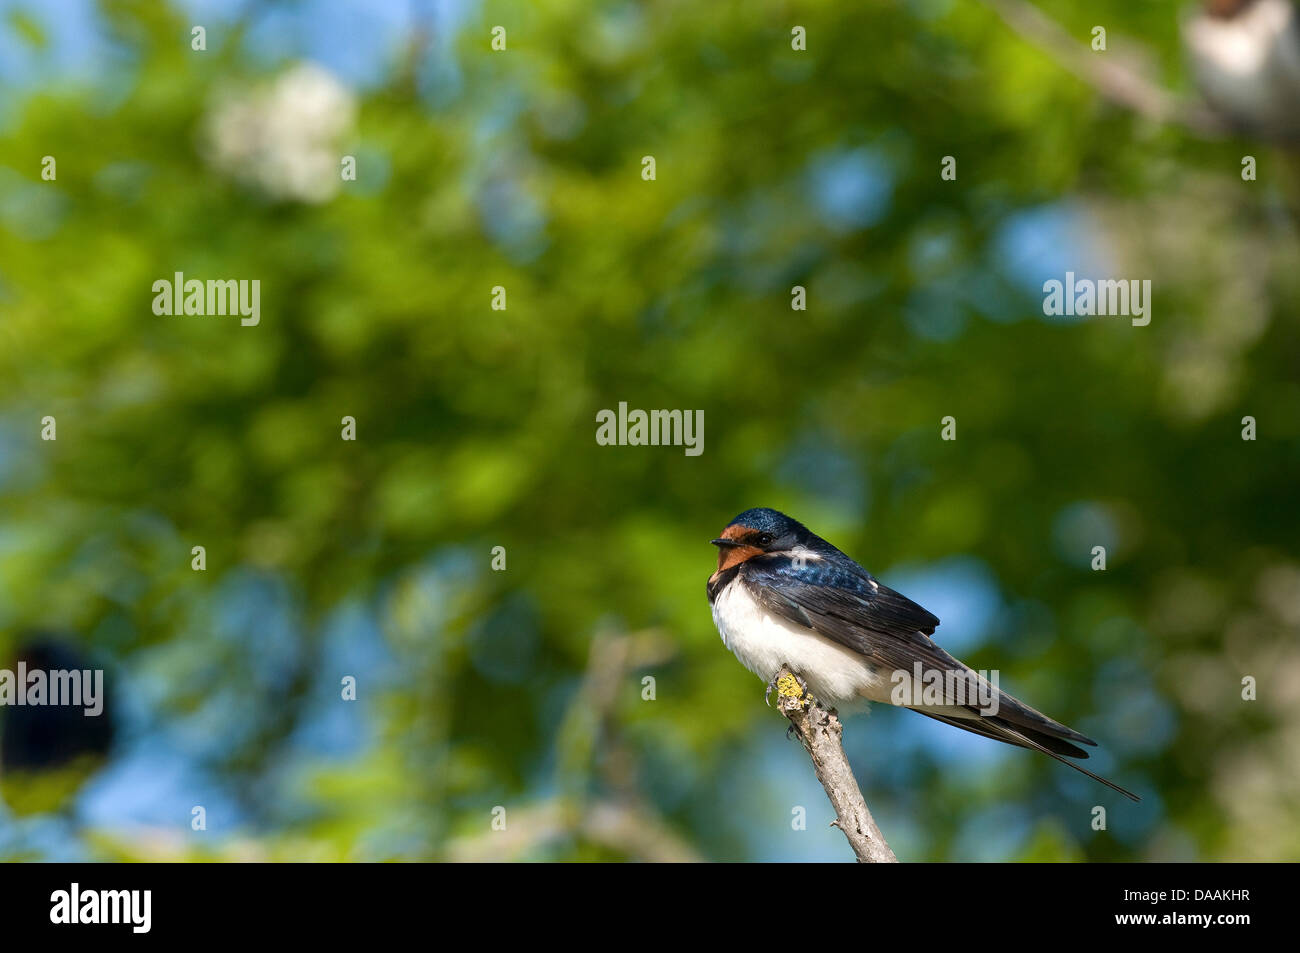 Europe, Bird, branch, Swallow, Hirundo rustica Stock Photo